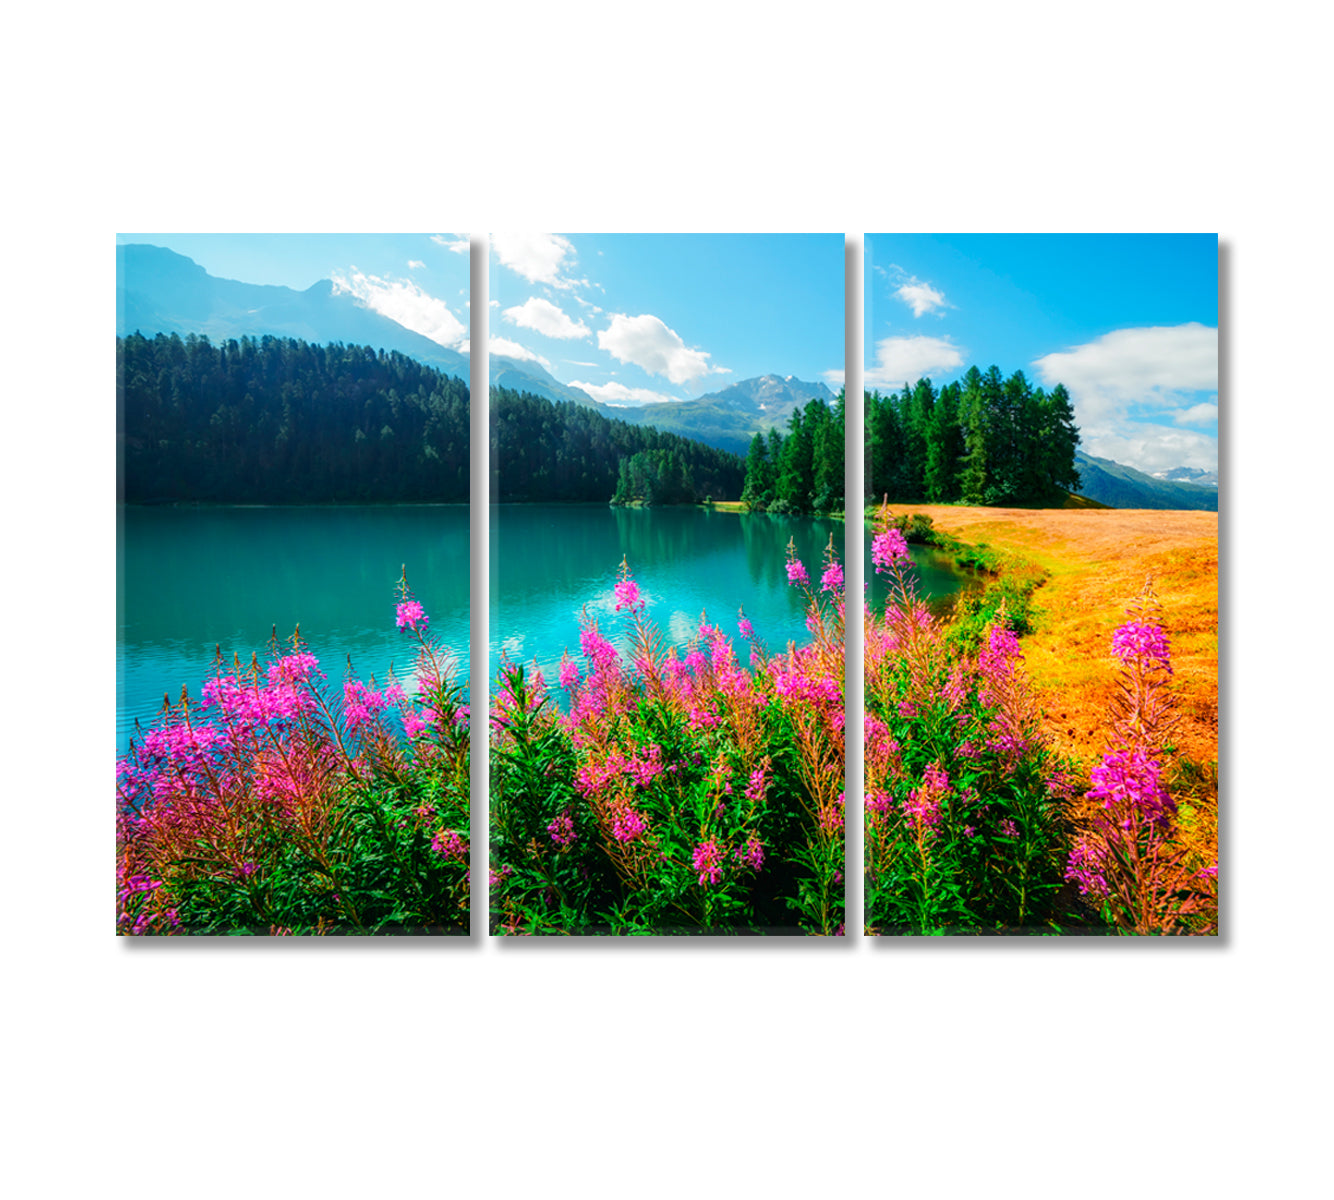 Summer Landscape On The Champferersee Lake Switzerland Canvas Print-Canvas Print-CetArt-3 Panels-36x24 inches-CetArt